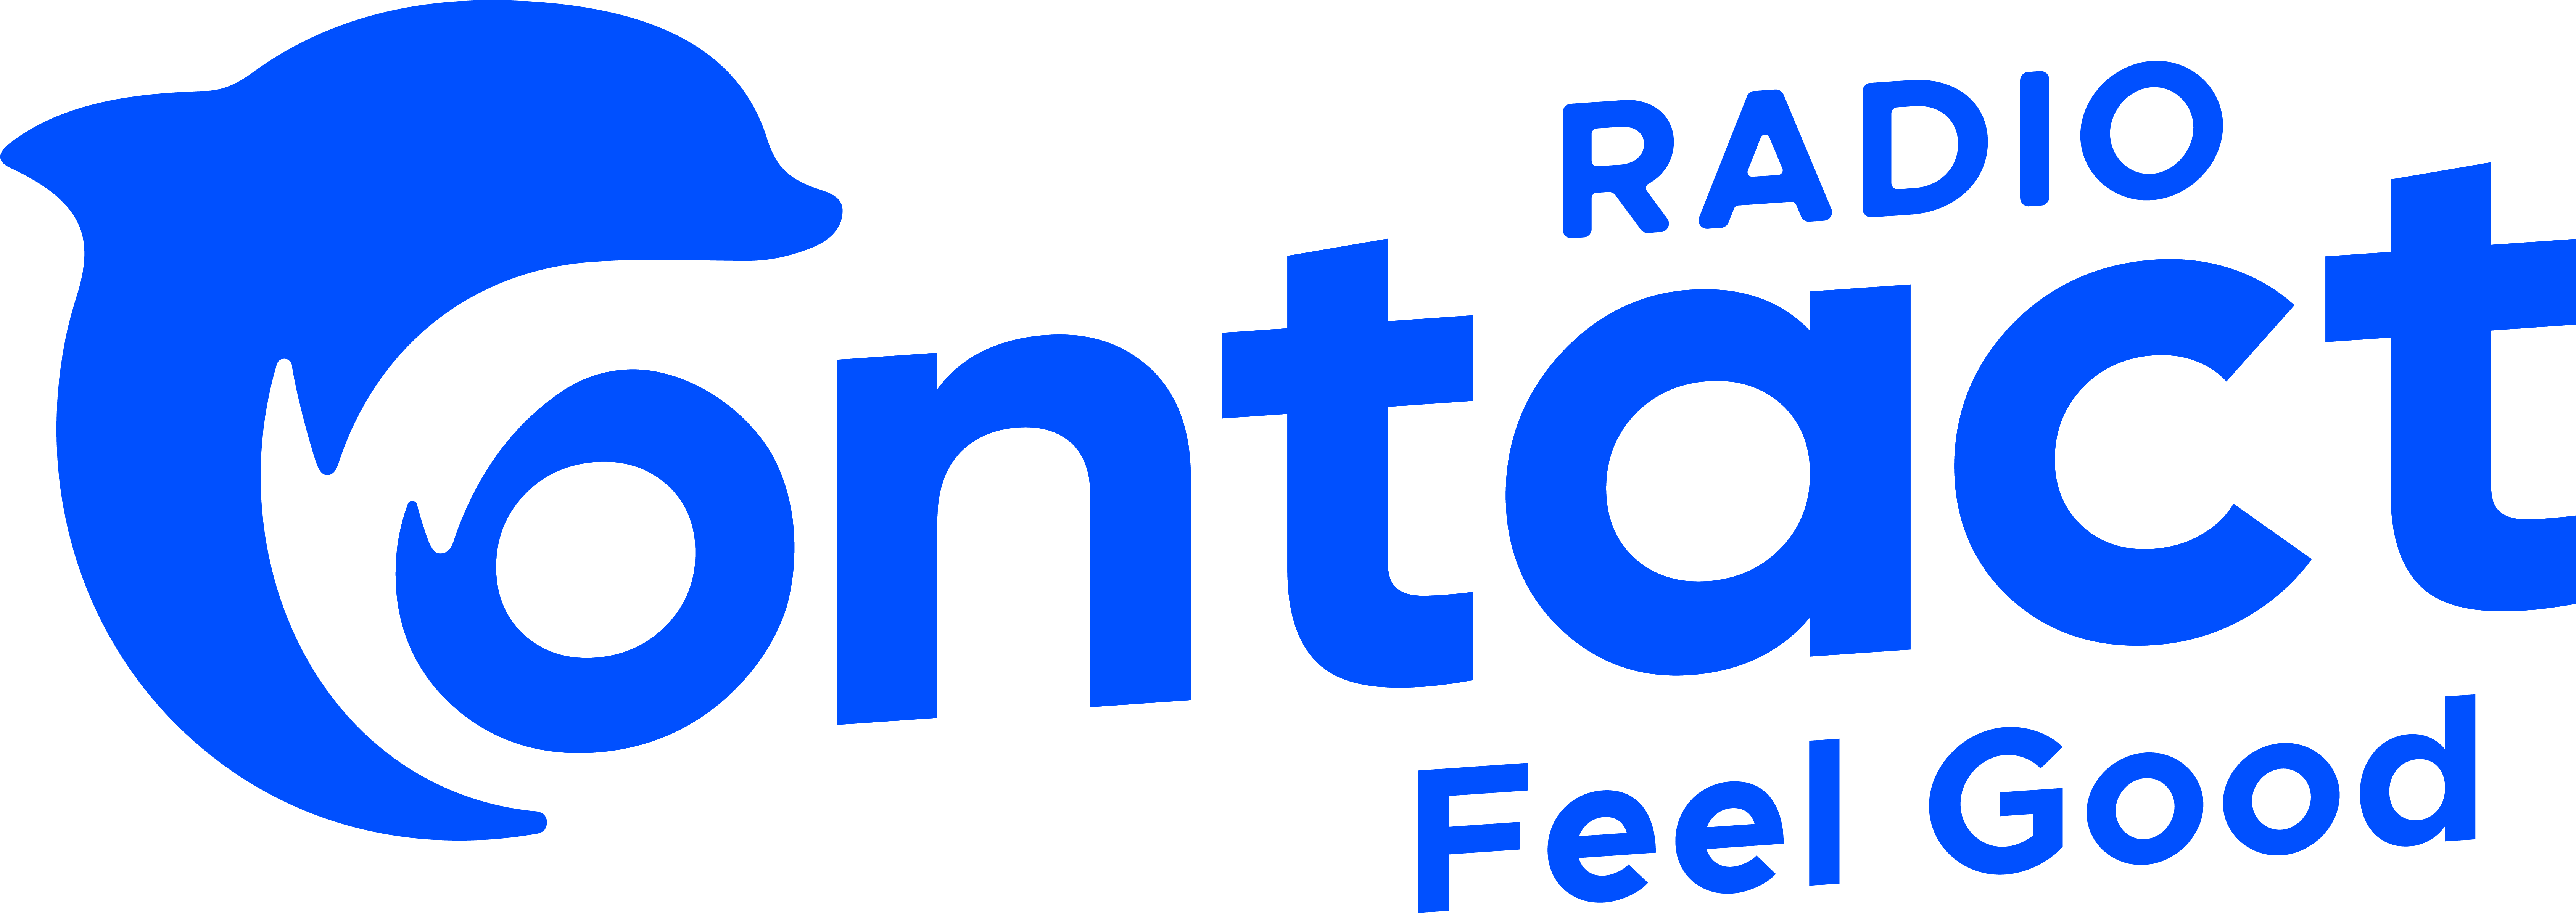 Radio contact logo